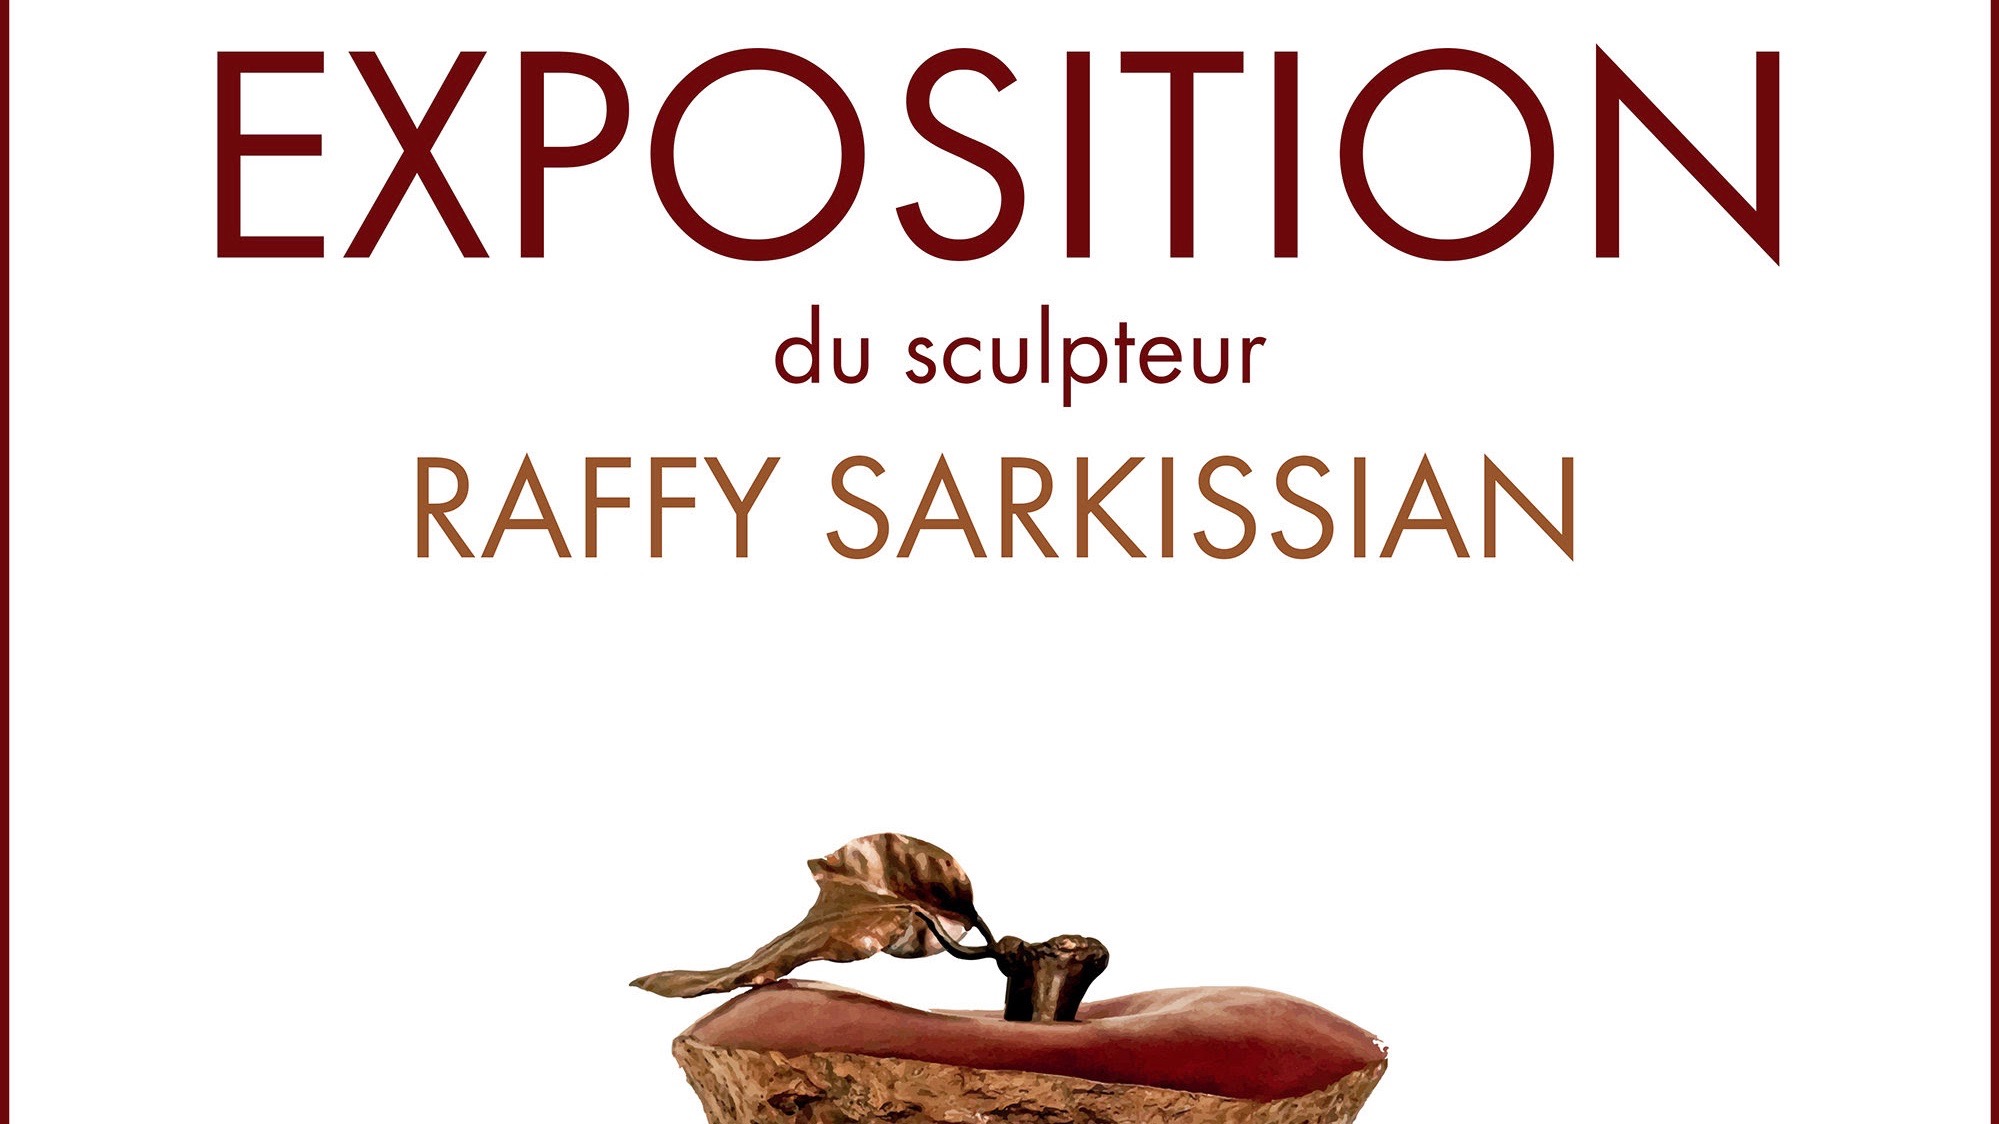 Art Exhibition Raffy Sarkissian